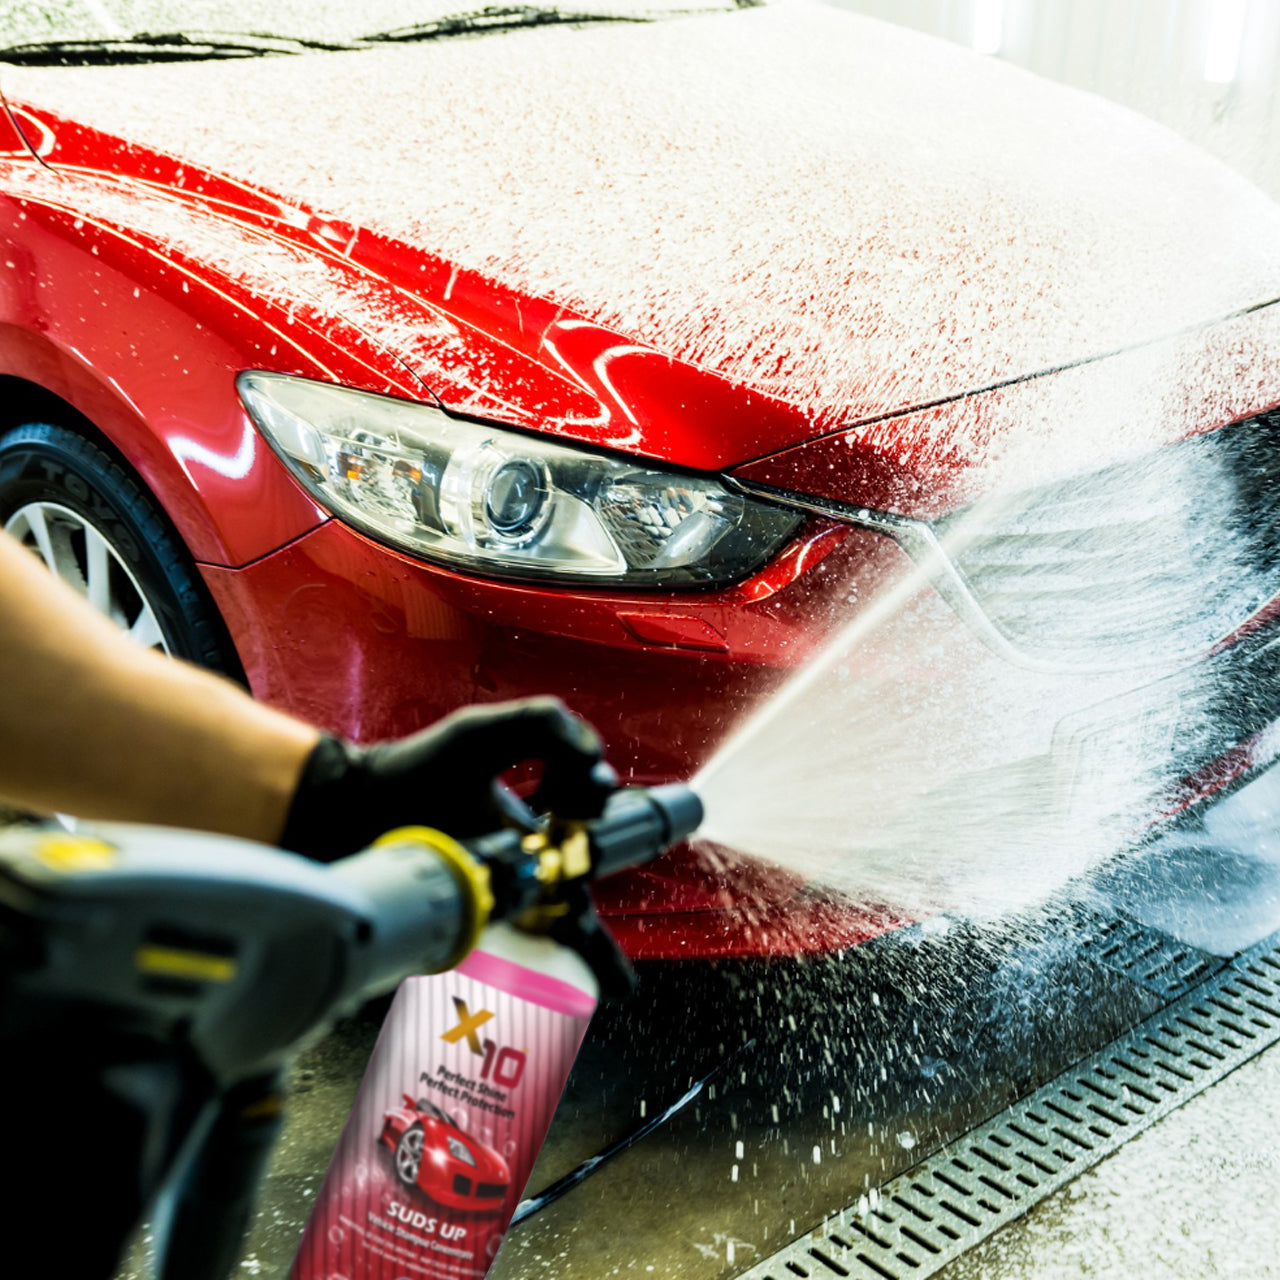 Car wash carpet cleaning best practices – Sun & Suds Car Wash